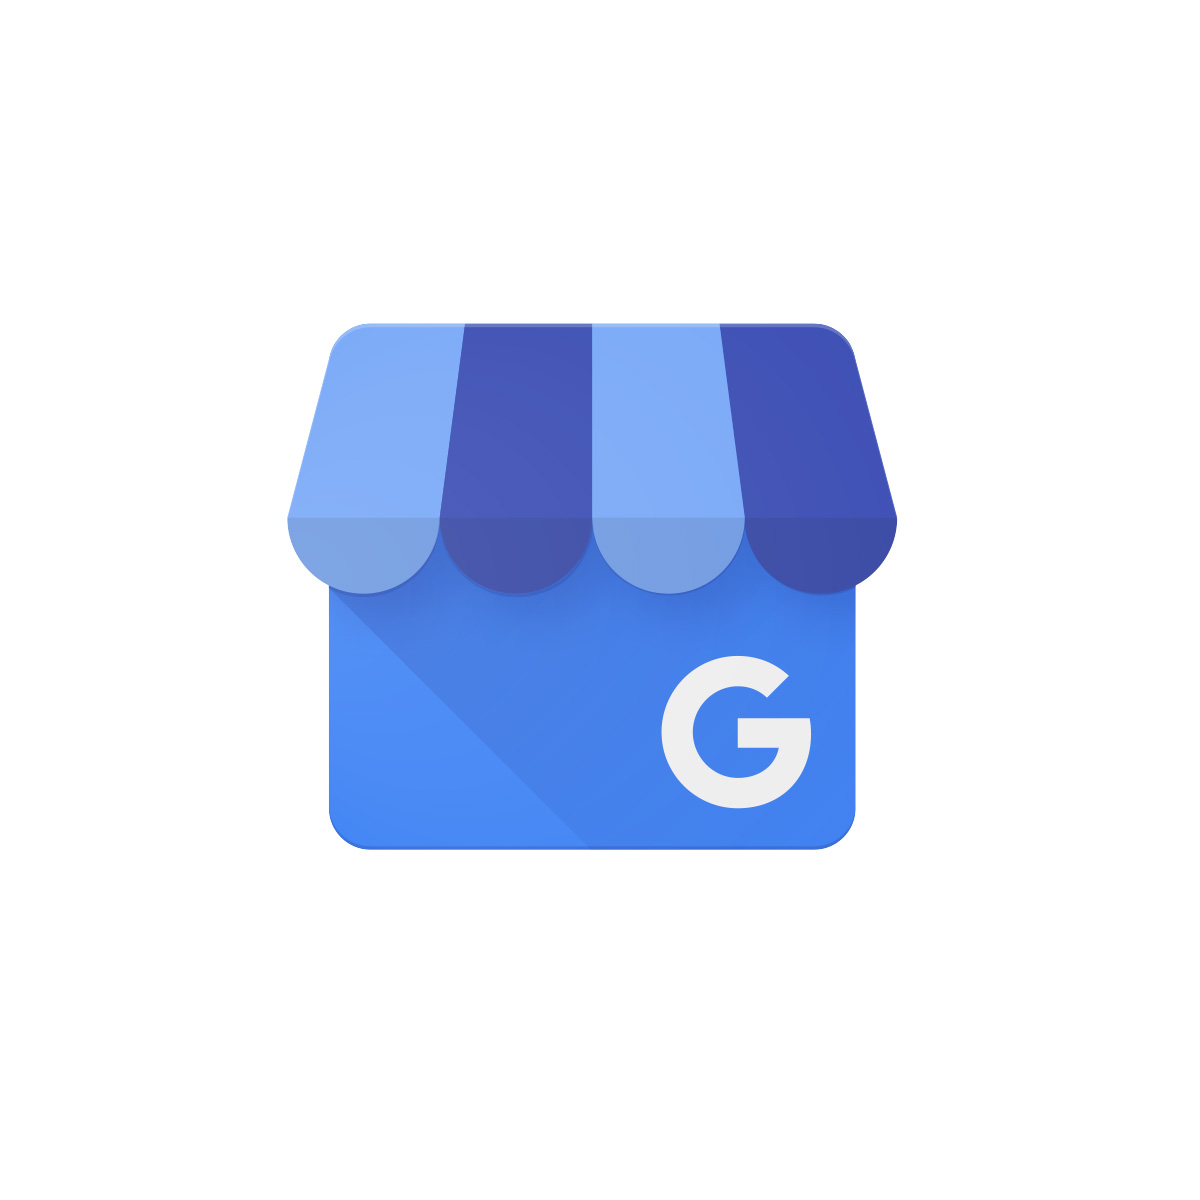 Gmb Logo - Logo Google Mybusi